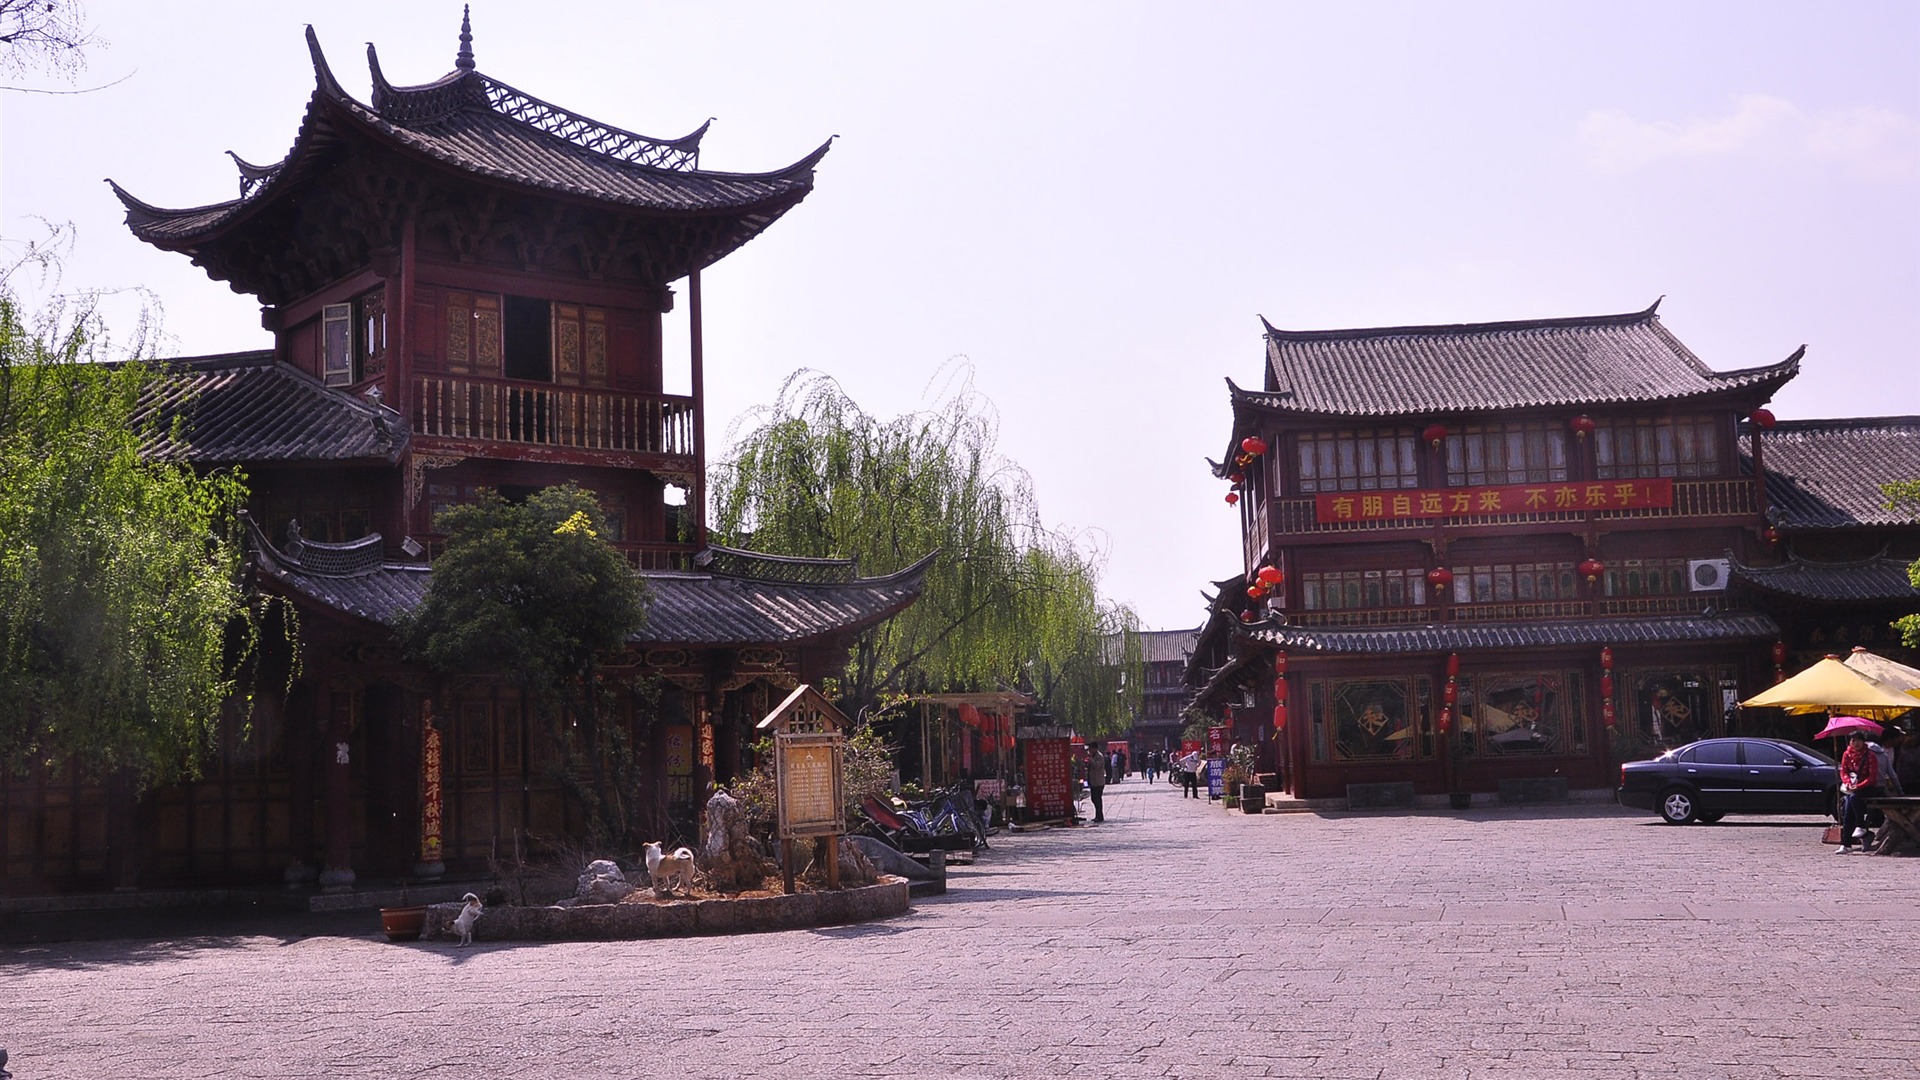 Lijiang ancient town atmosphere (2) (old Hong OK works) #19 - 1920x1080